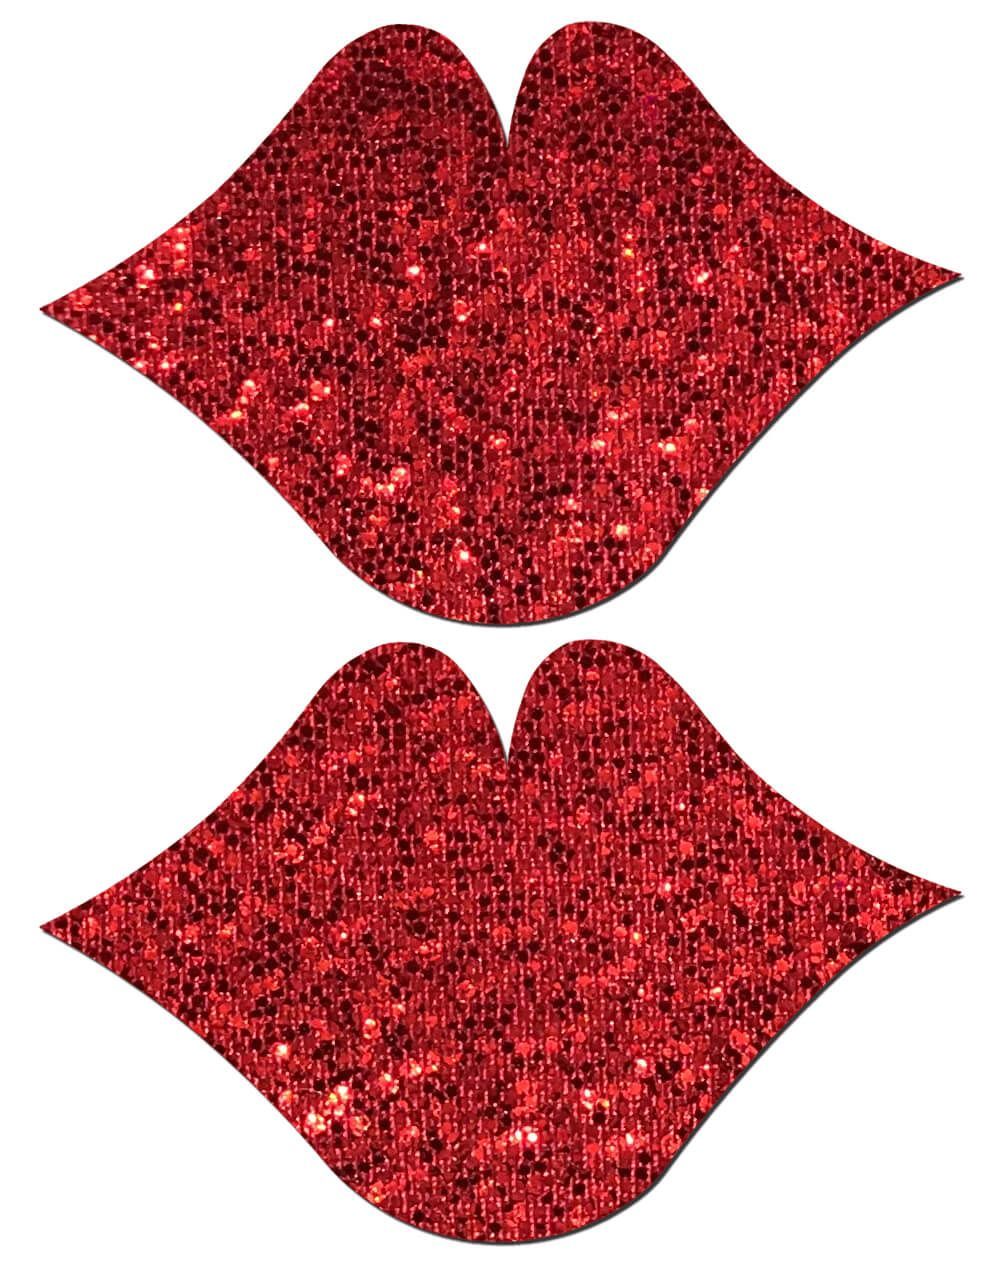 Love: Red & Pink Glitter Velvet Pumping Heart Nipple Pasties